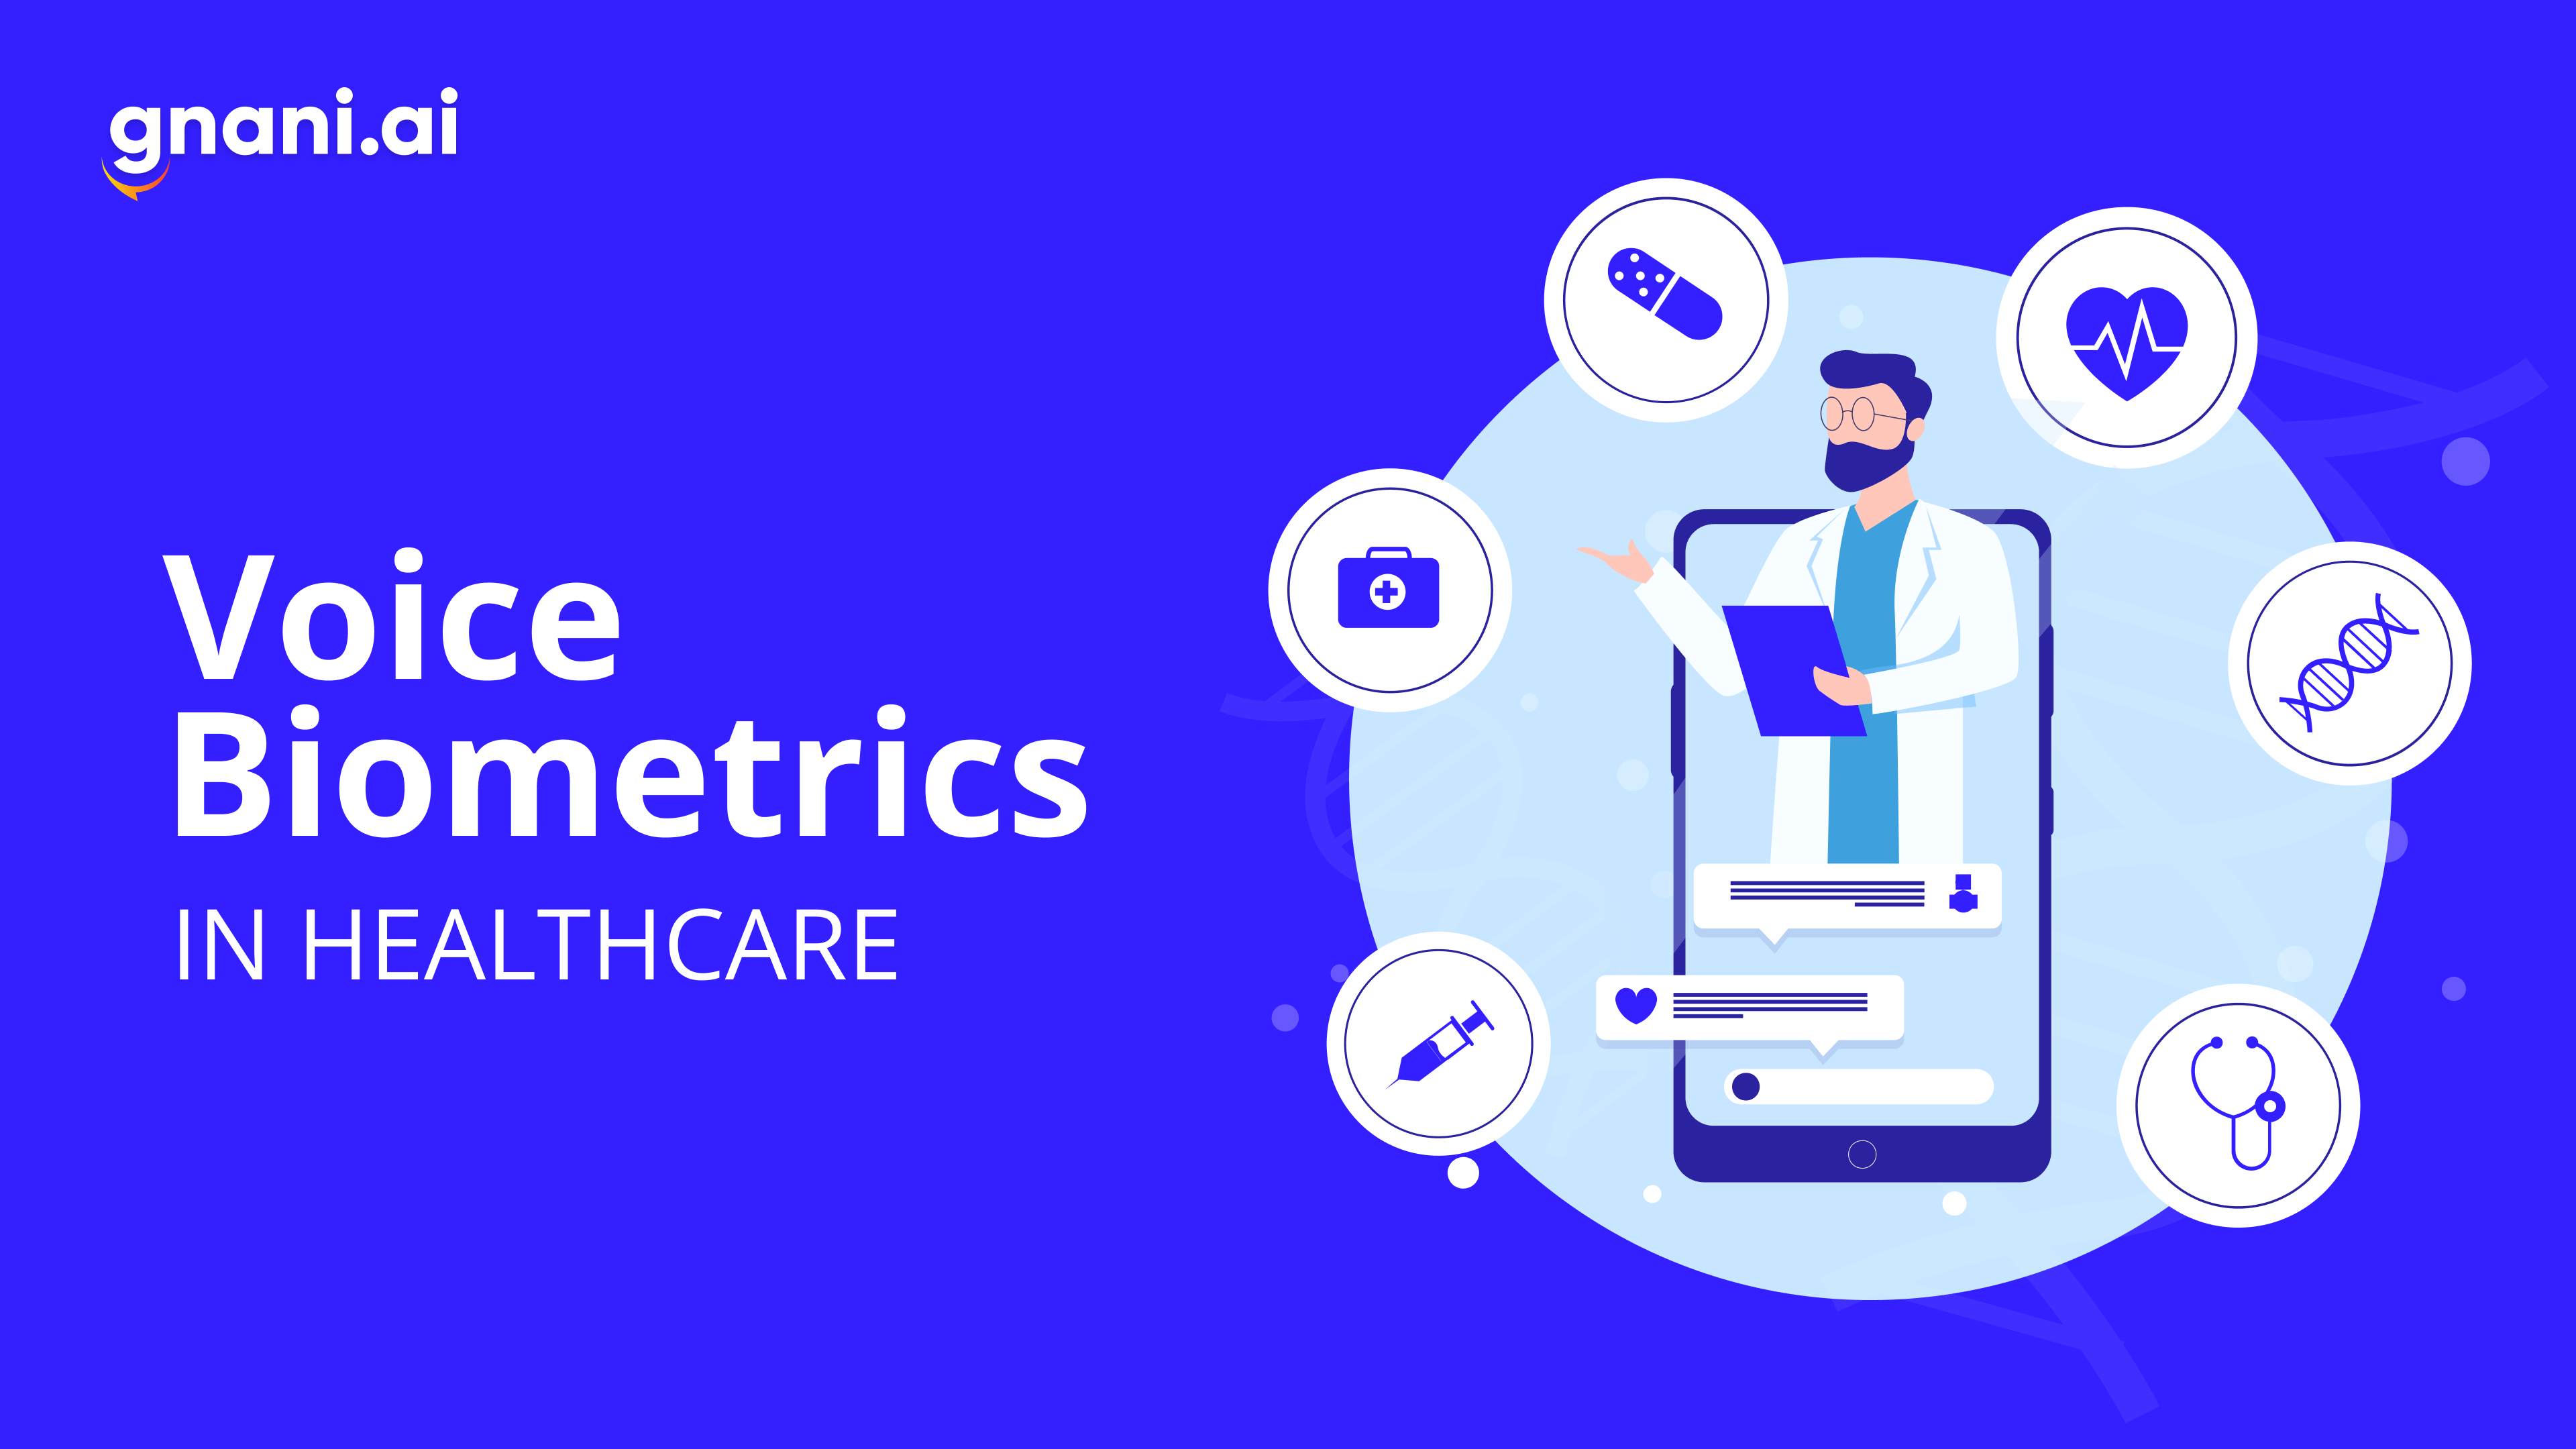 voice biometrics in healthcare featured image